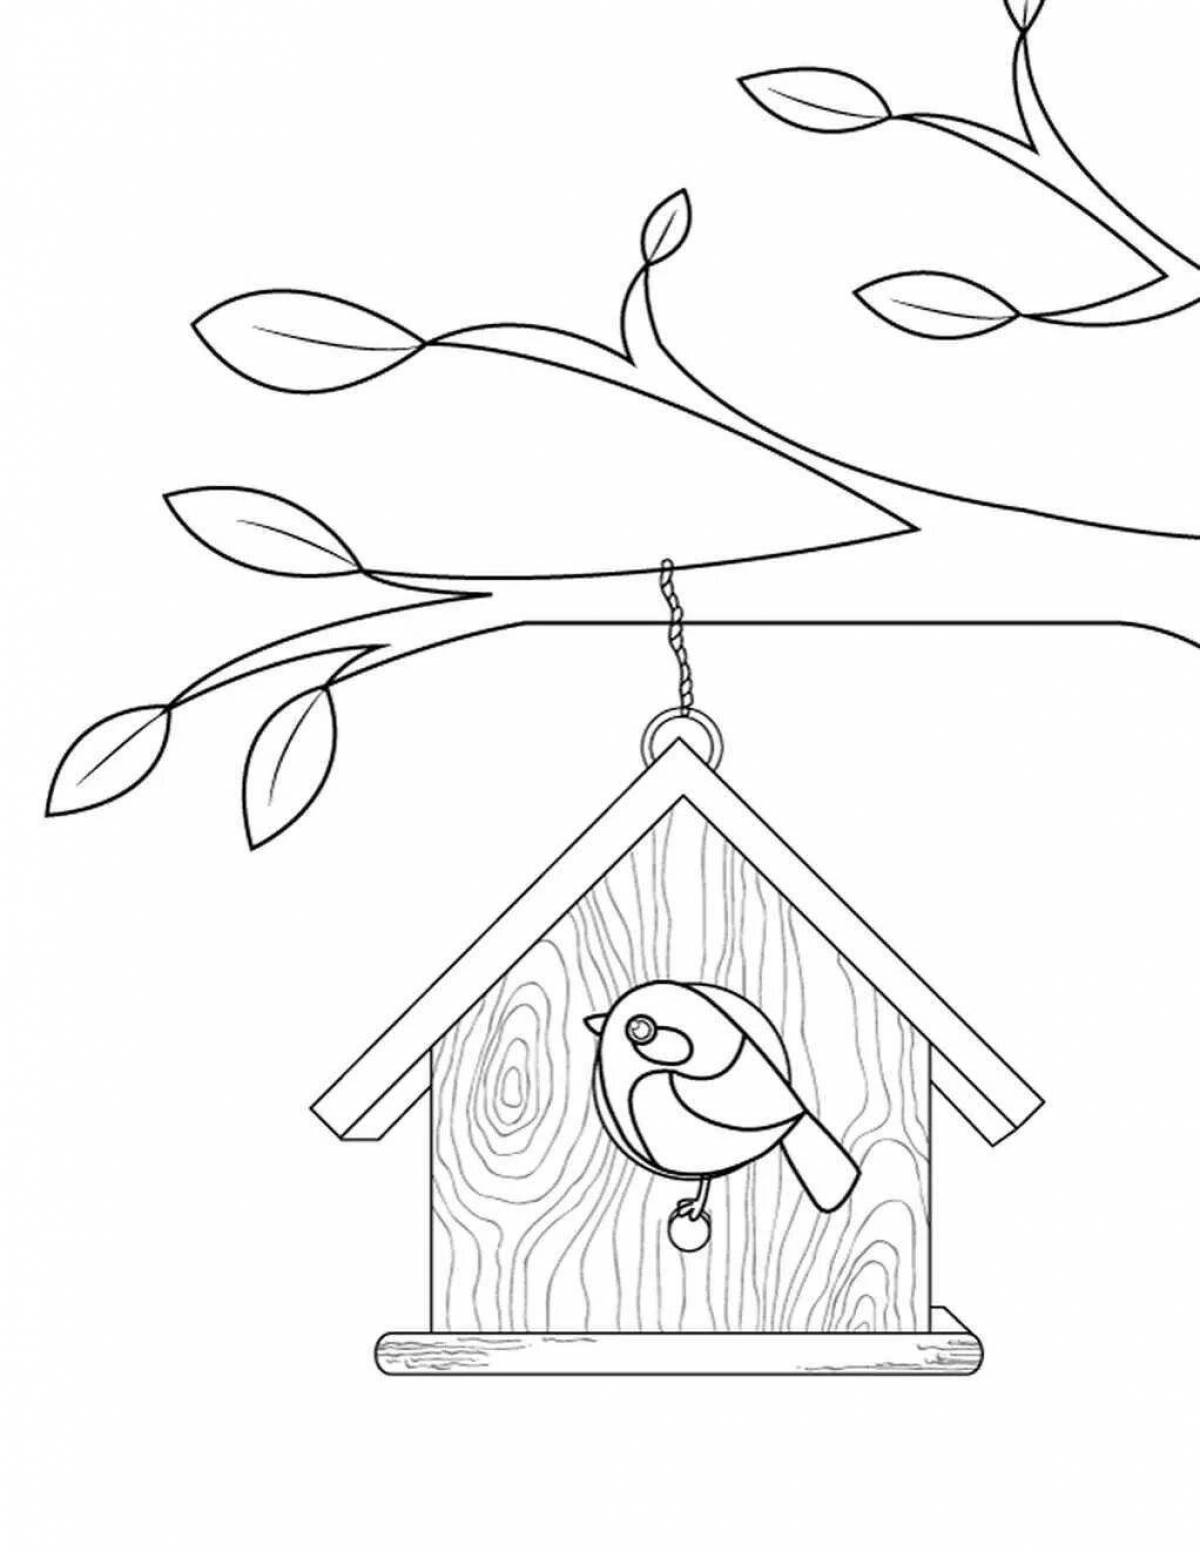 Coloring page wonderful bird feeder